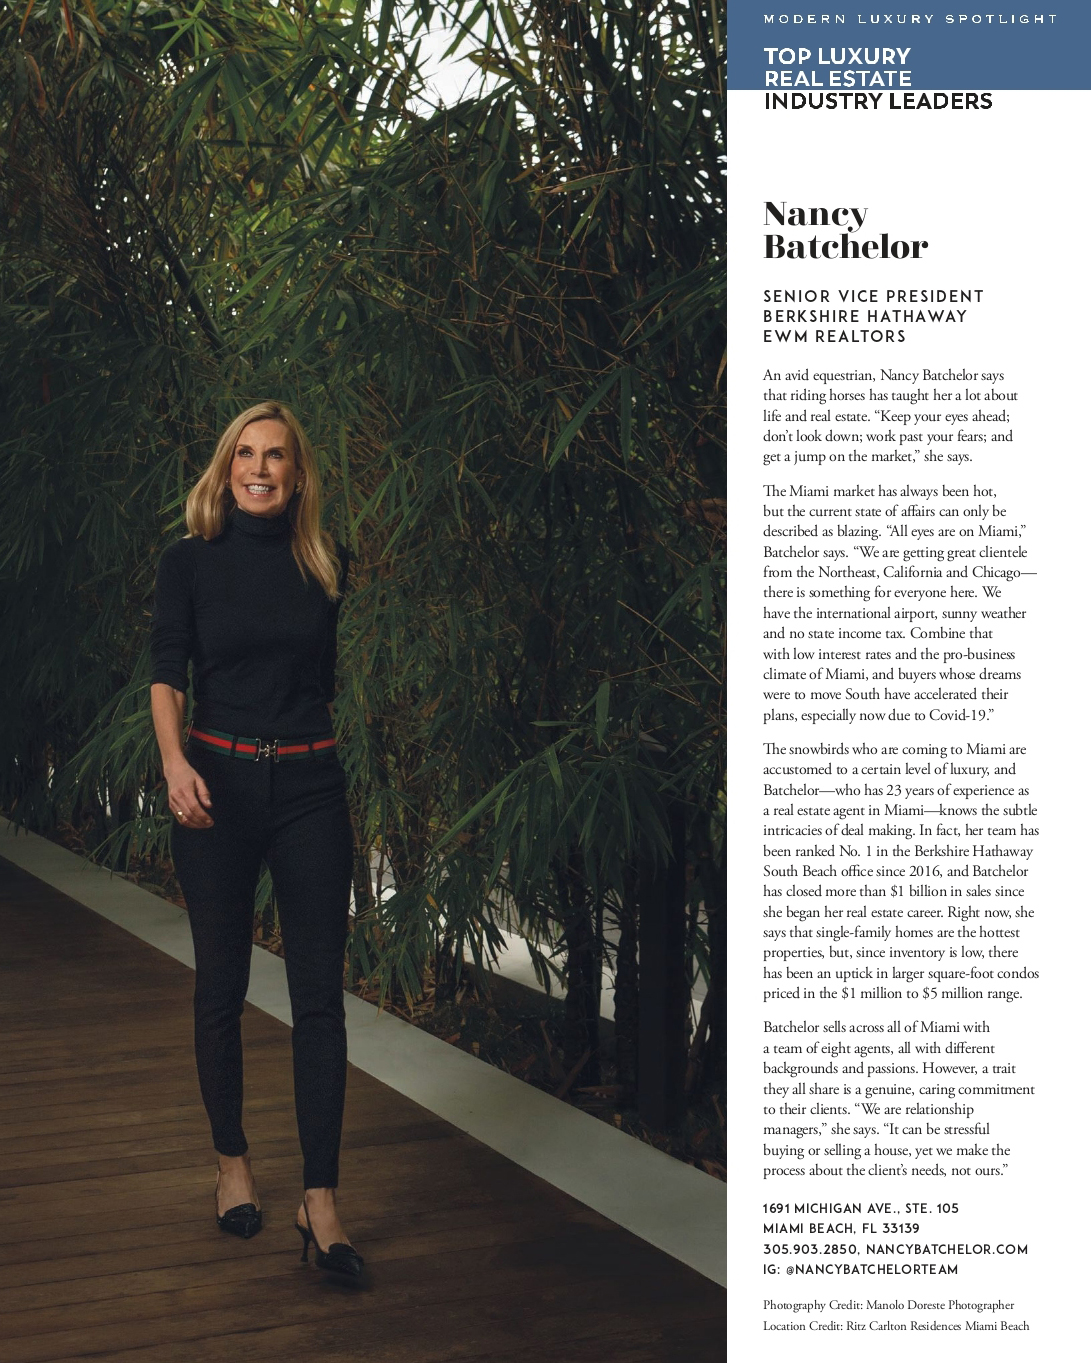 Modern Luxury Miami Magazine’s Top Luxury Real Estate Industry Leaders